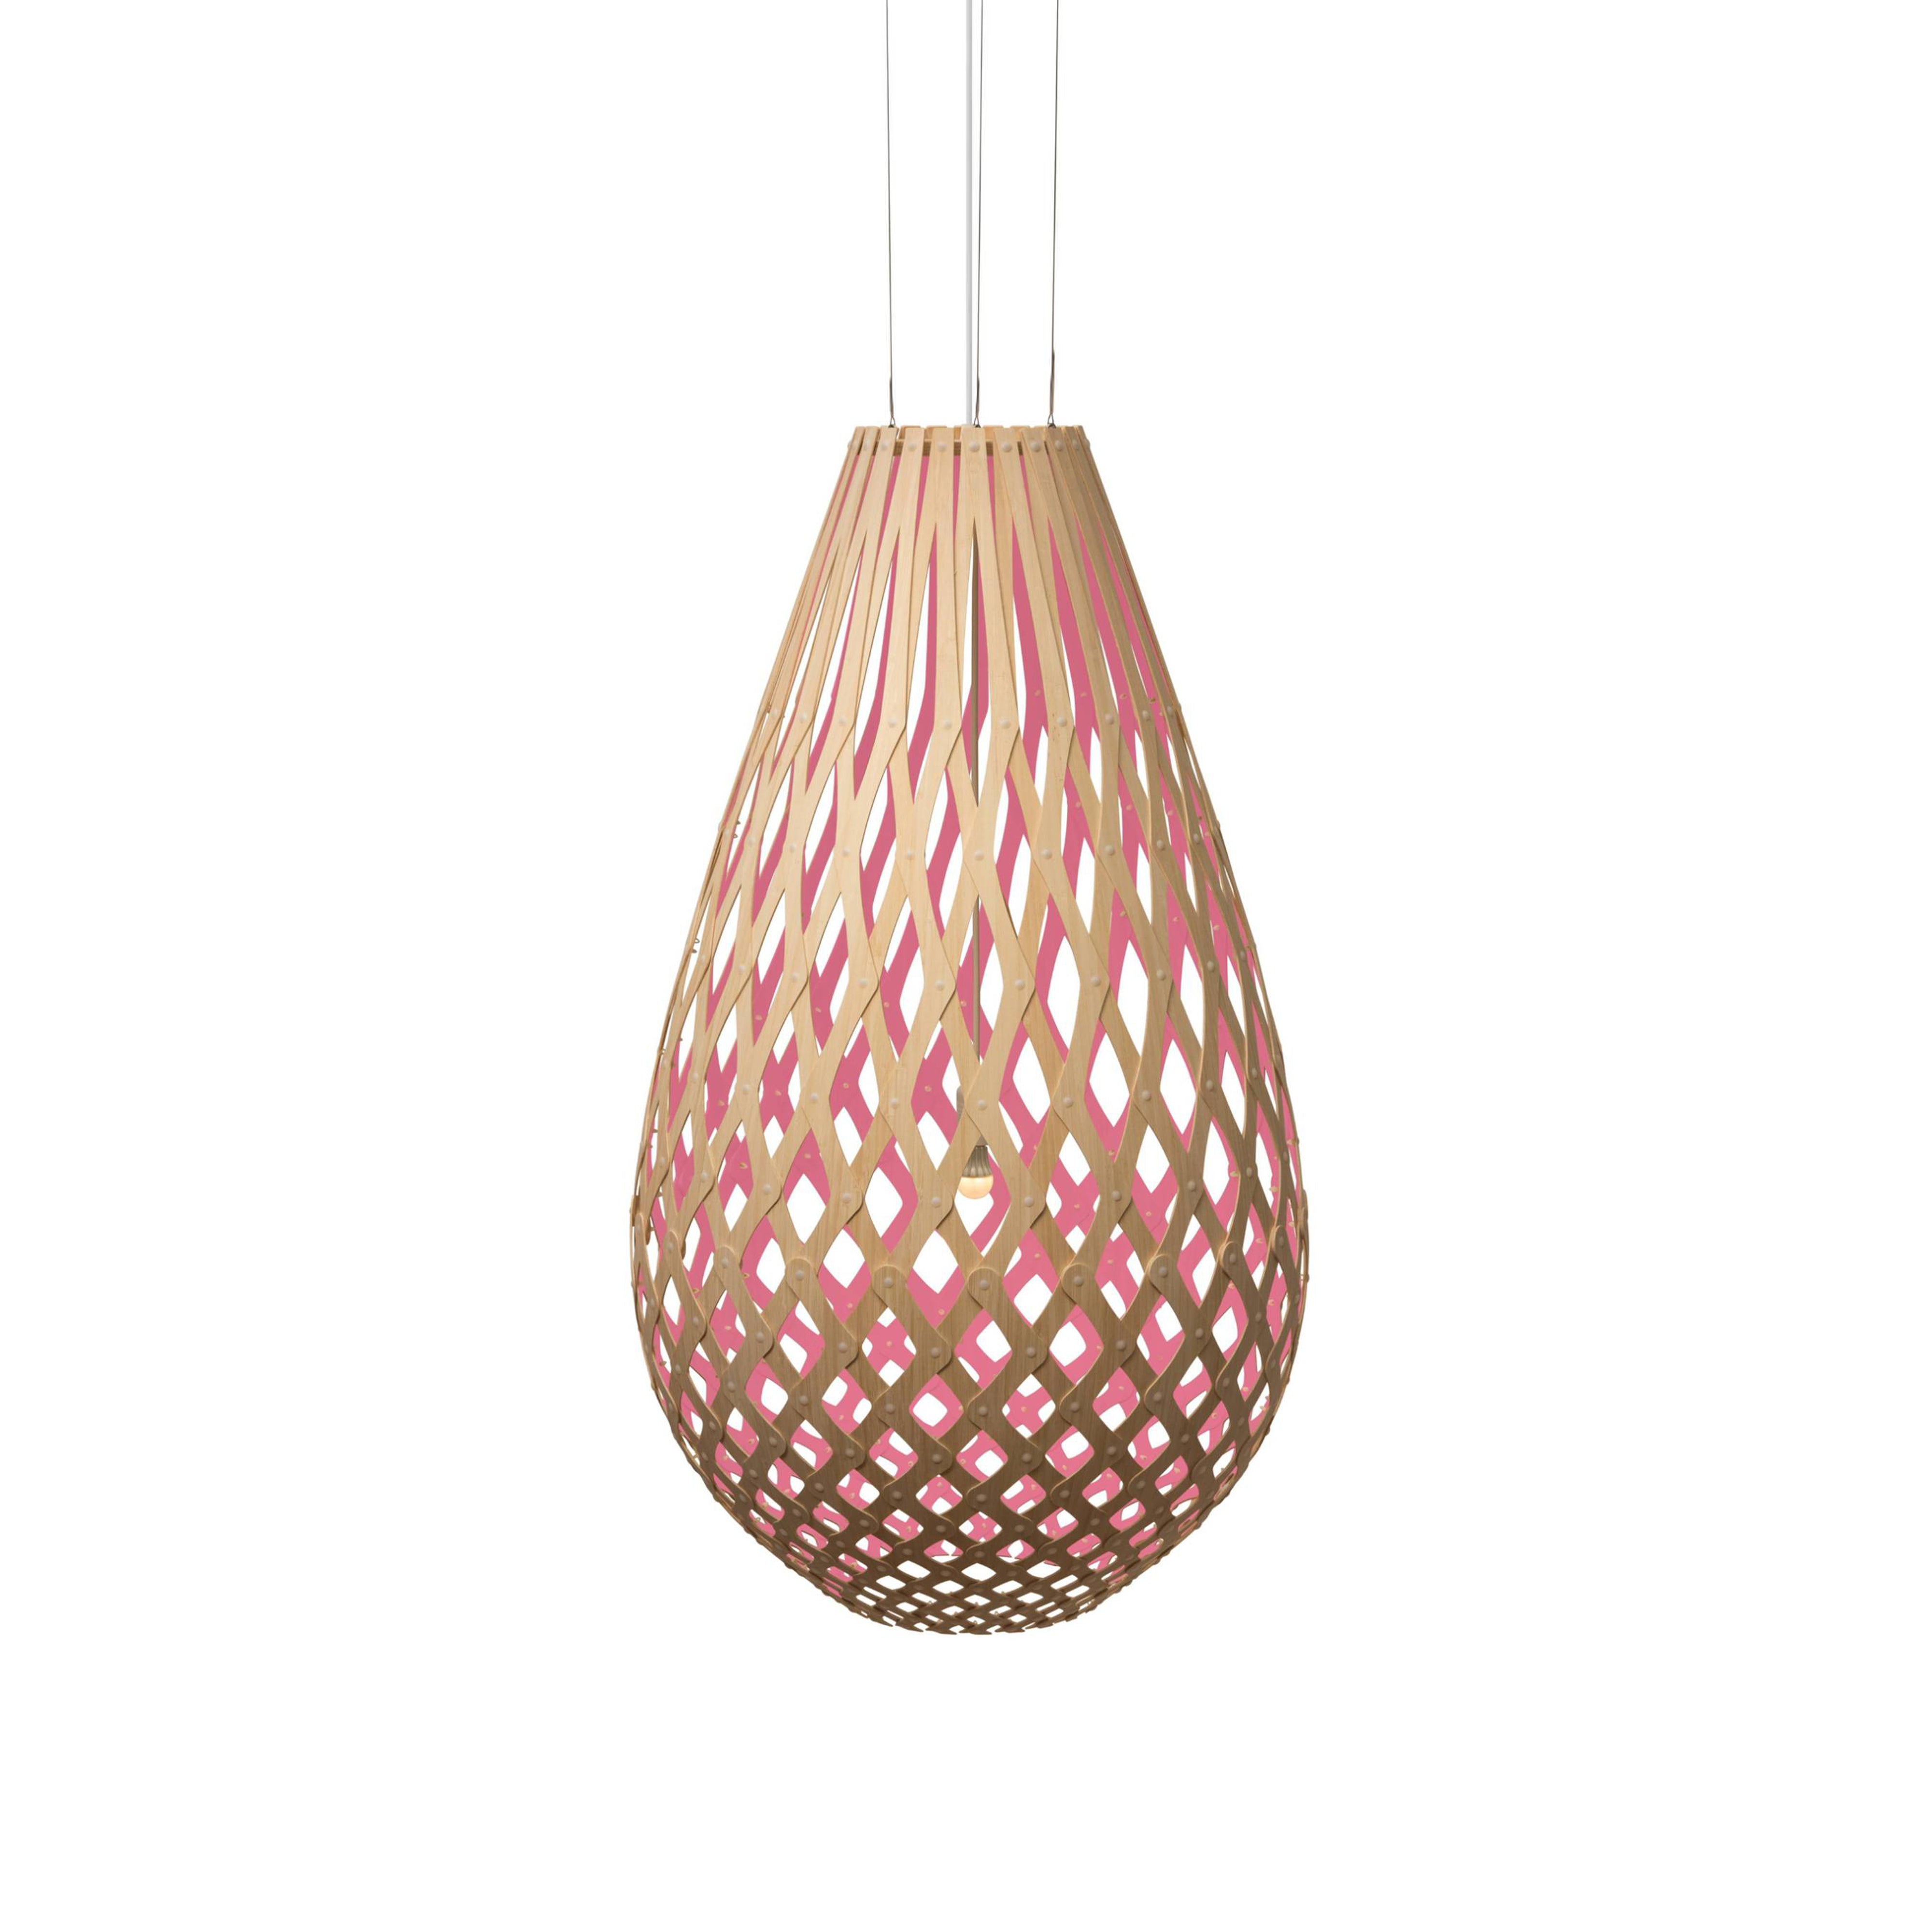 Kōura Pendant Light: Extra Large + Bamboo + Pink + White